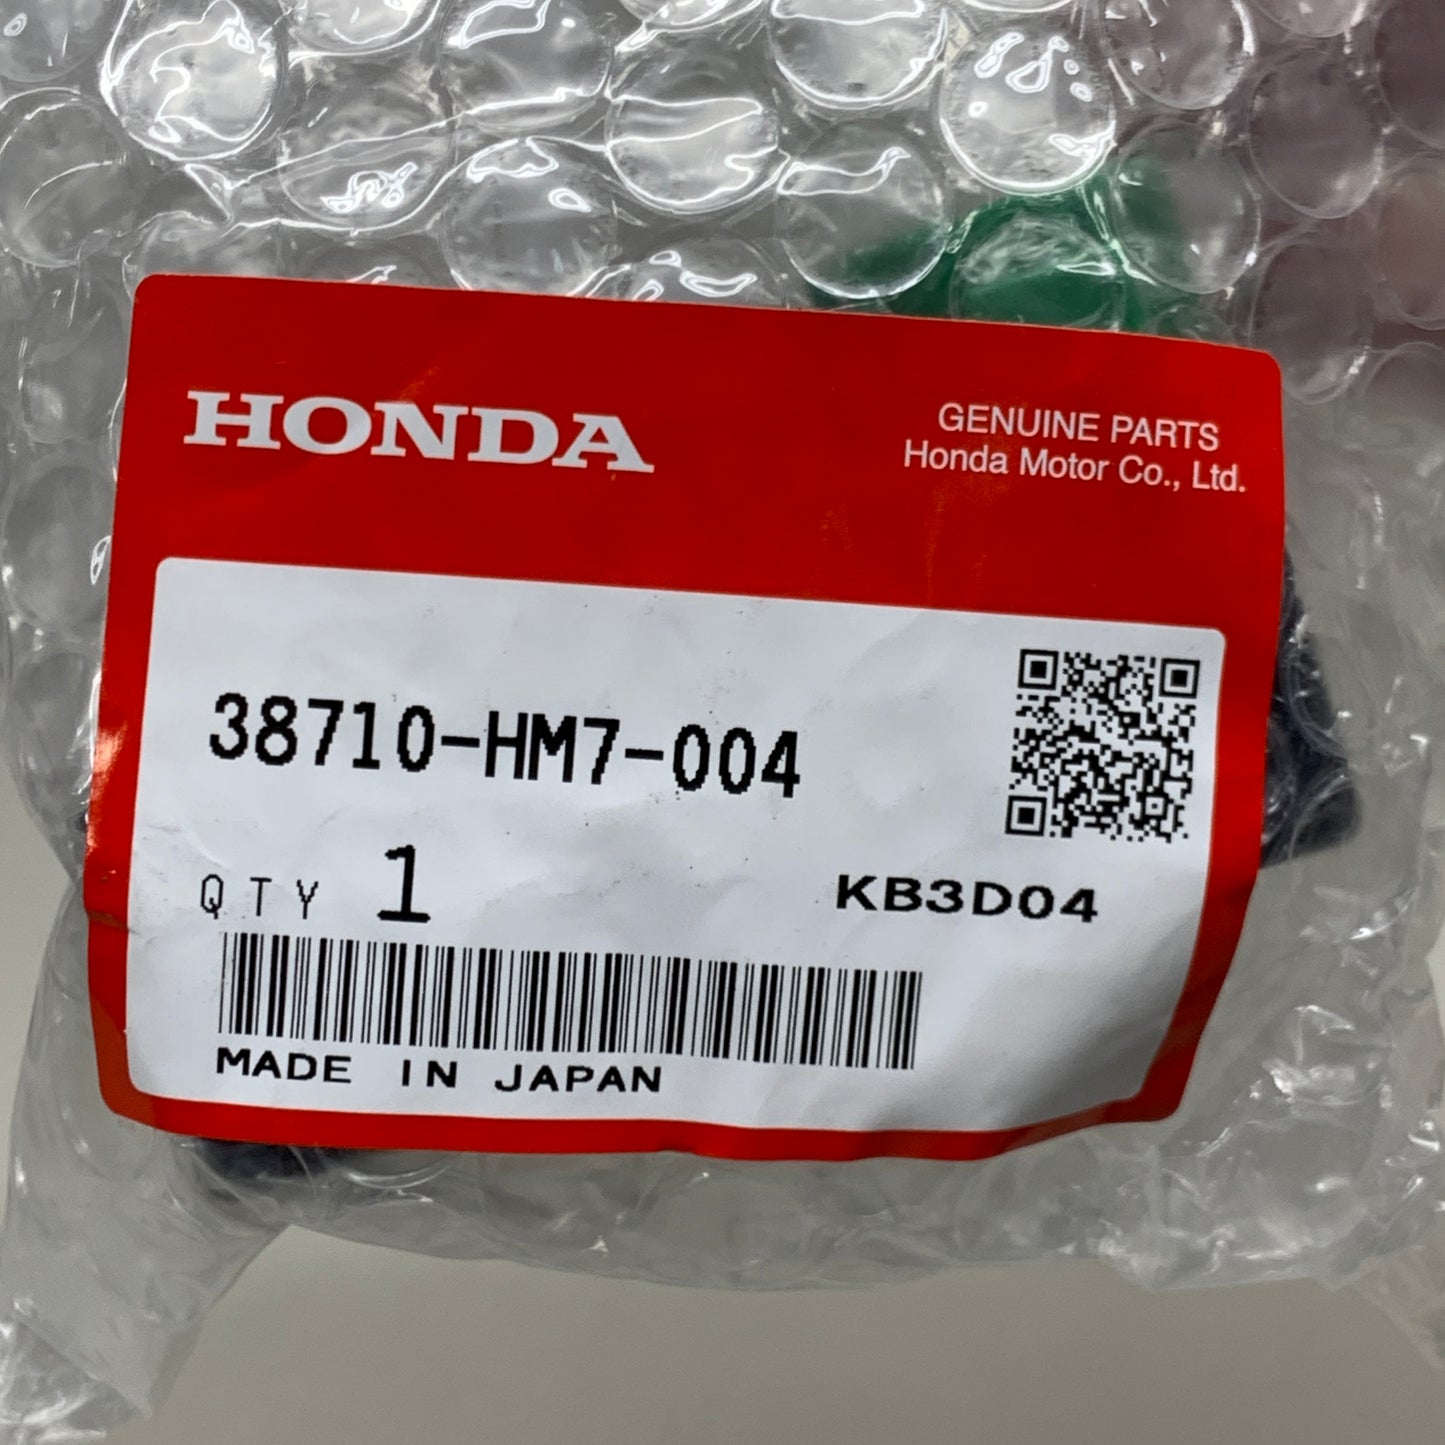 HONDA Fan Control Unit for Bikes 38710-HM7-004